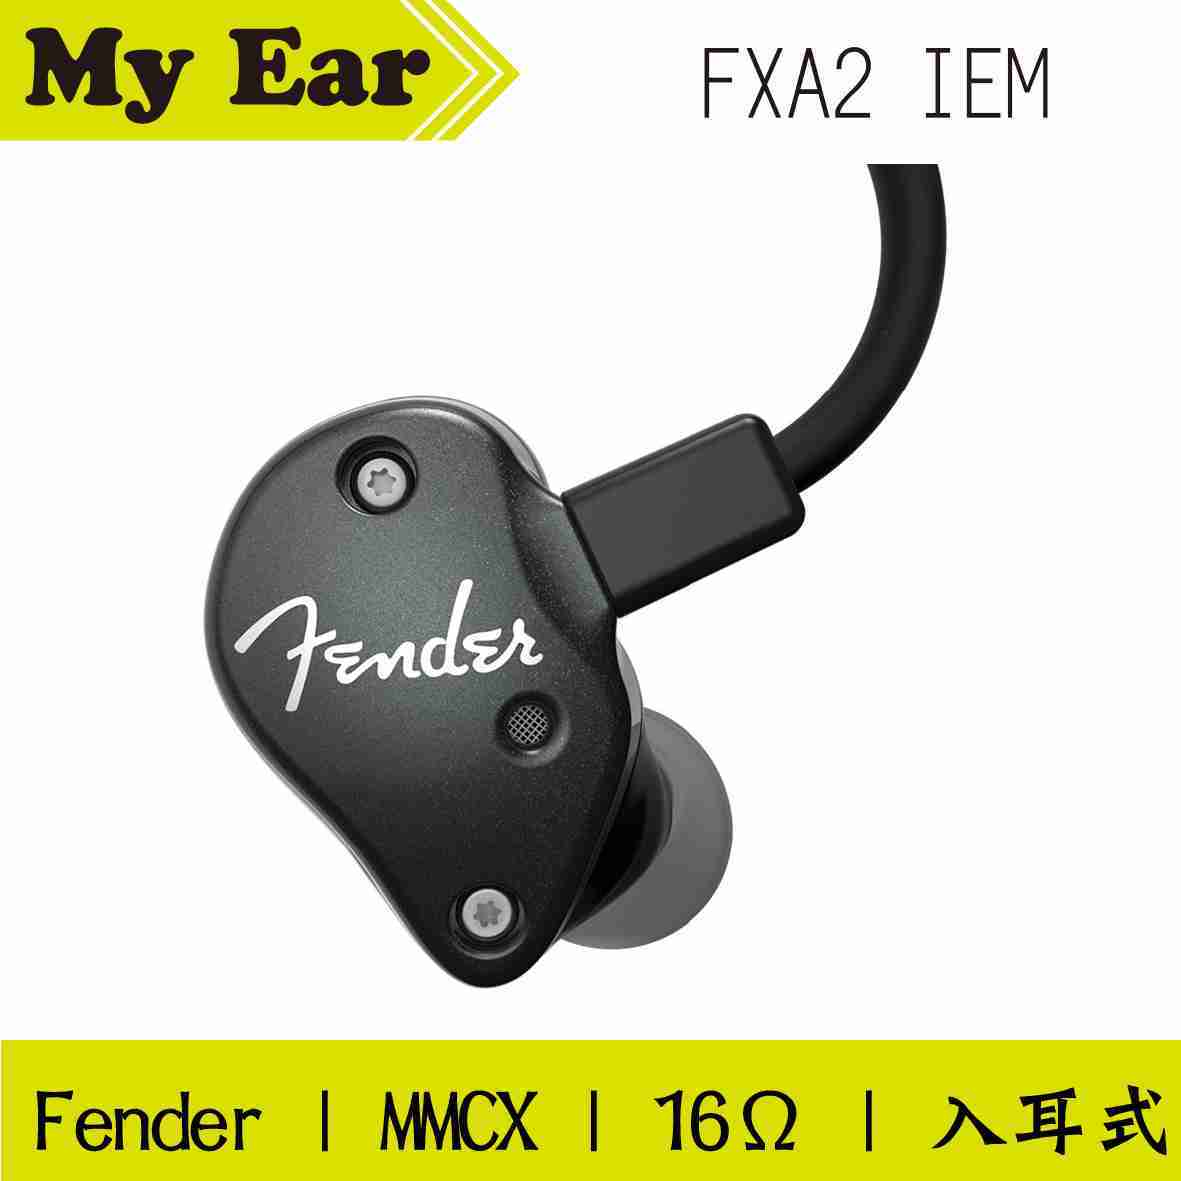 Fender FXA2 IEM 入耳式 監聽級 耳機 16Ω 黑色 | My Ear耳機專門店